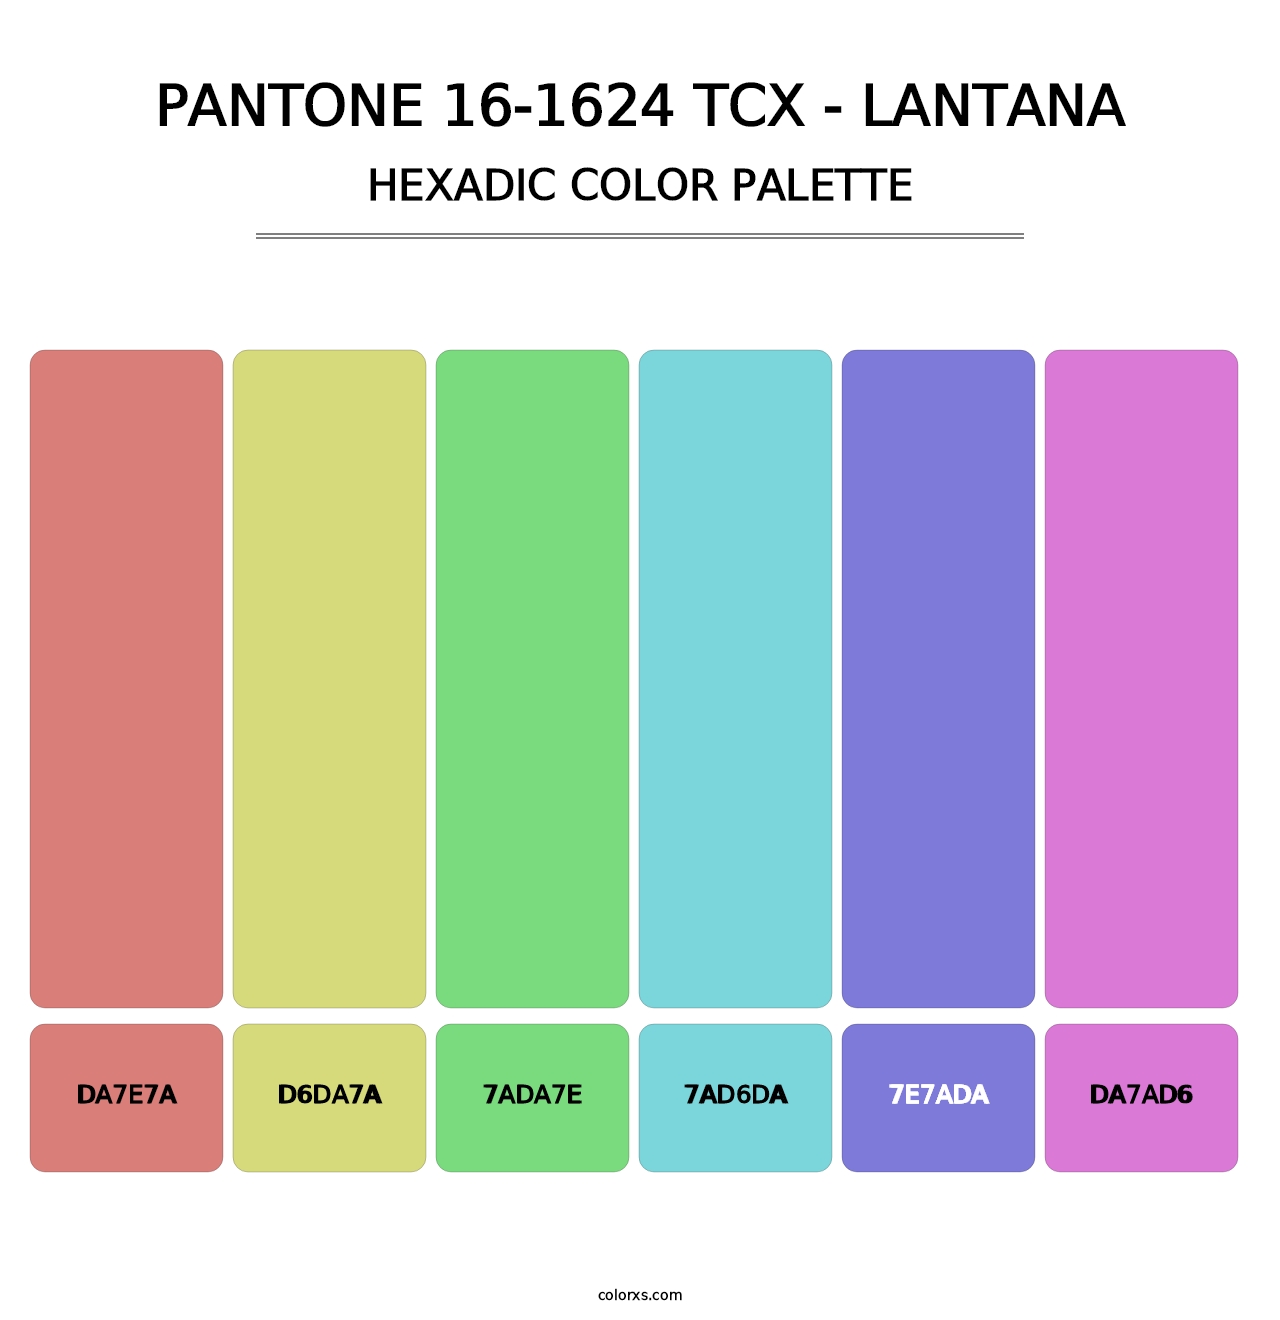 PANTONE 16-1624 TCX - Lantana - Hexadic Color Palette